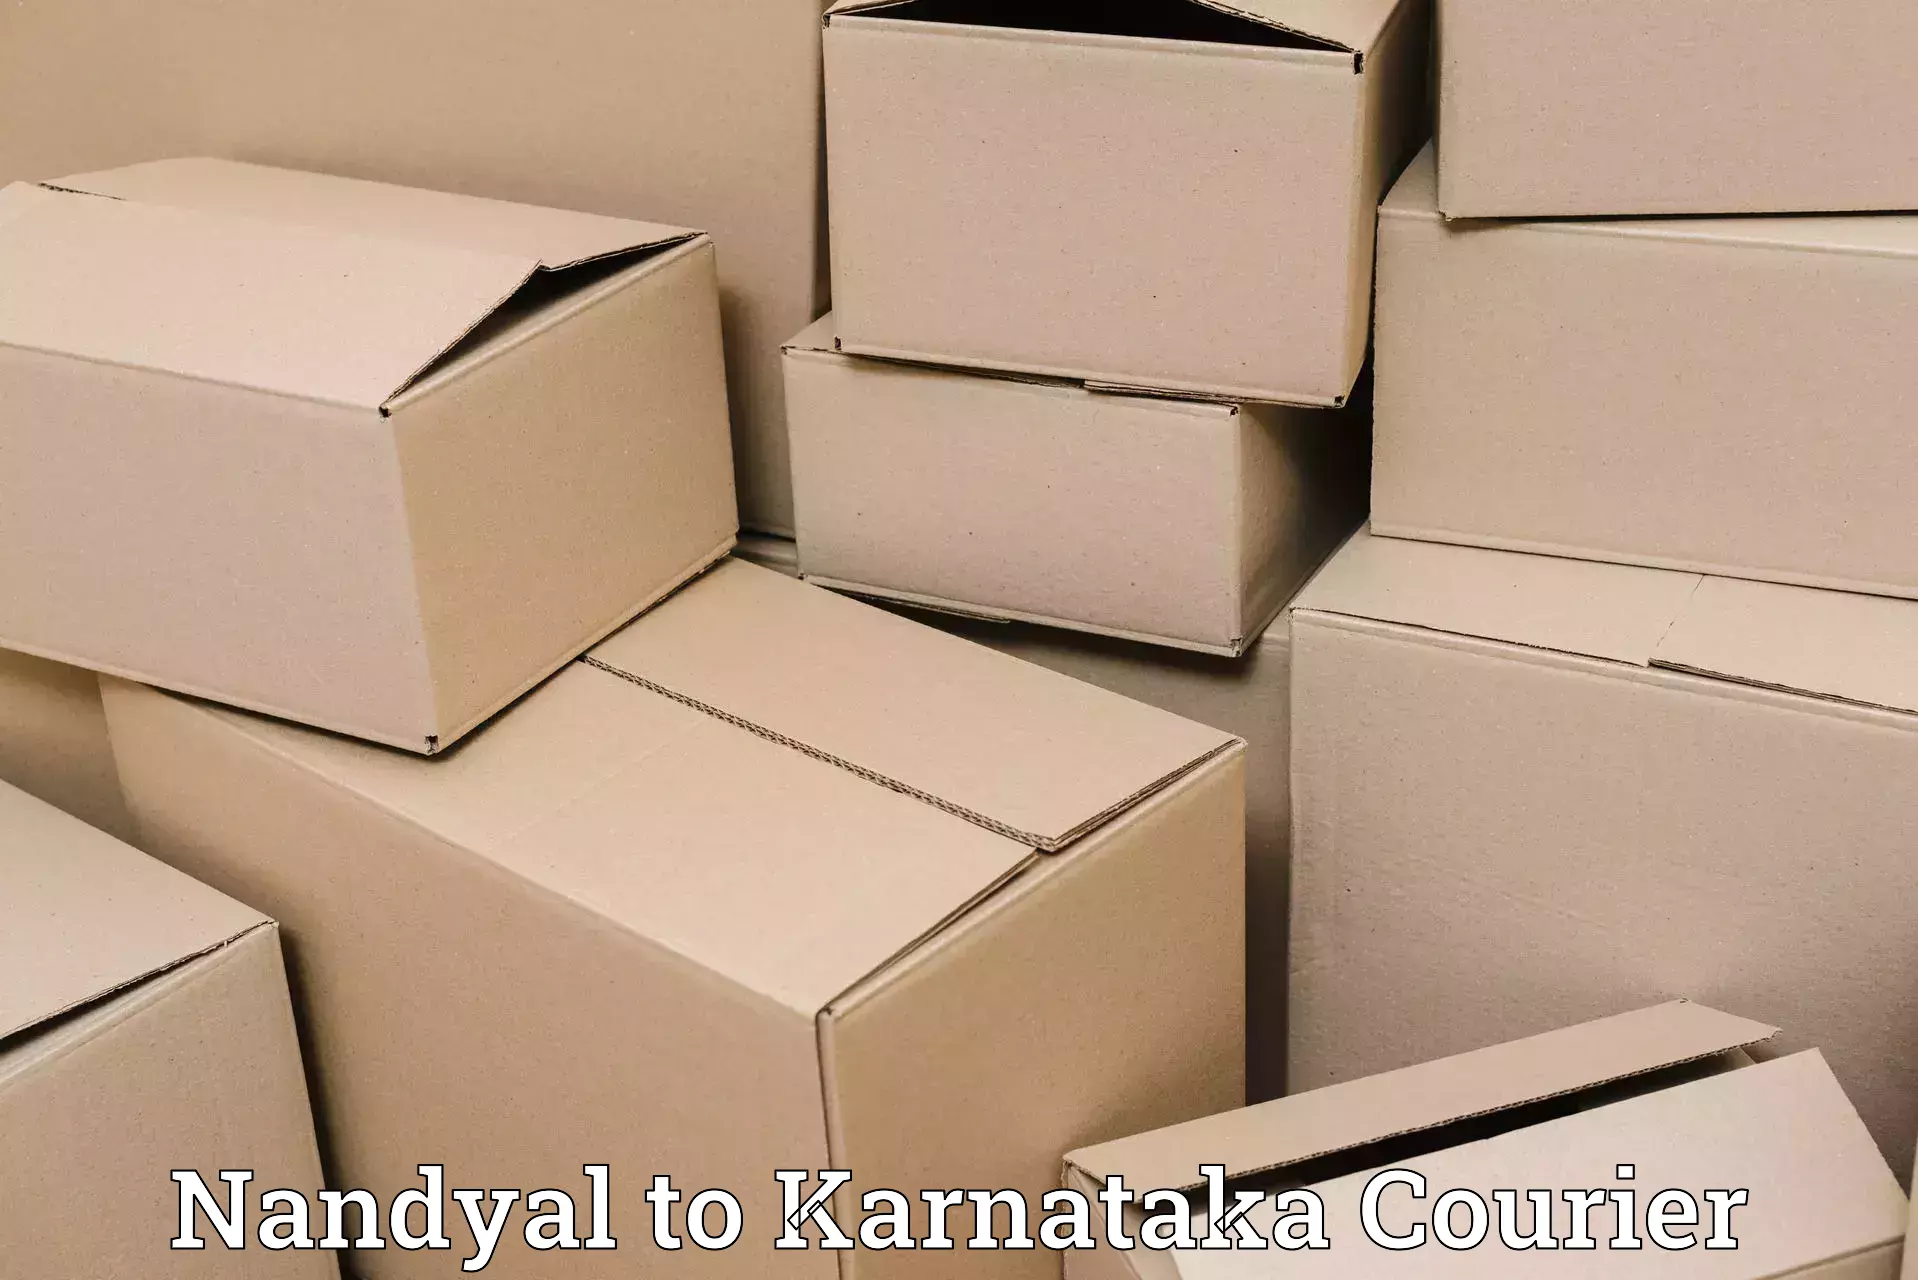 Tech-enabled shipping Nandyal to Kollegal